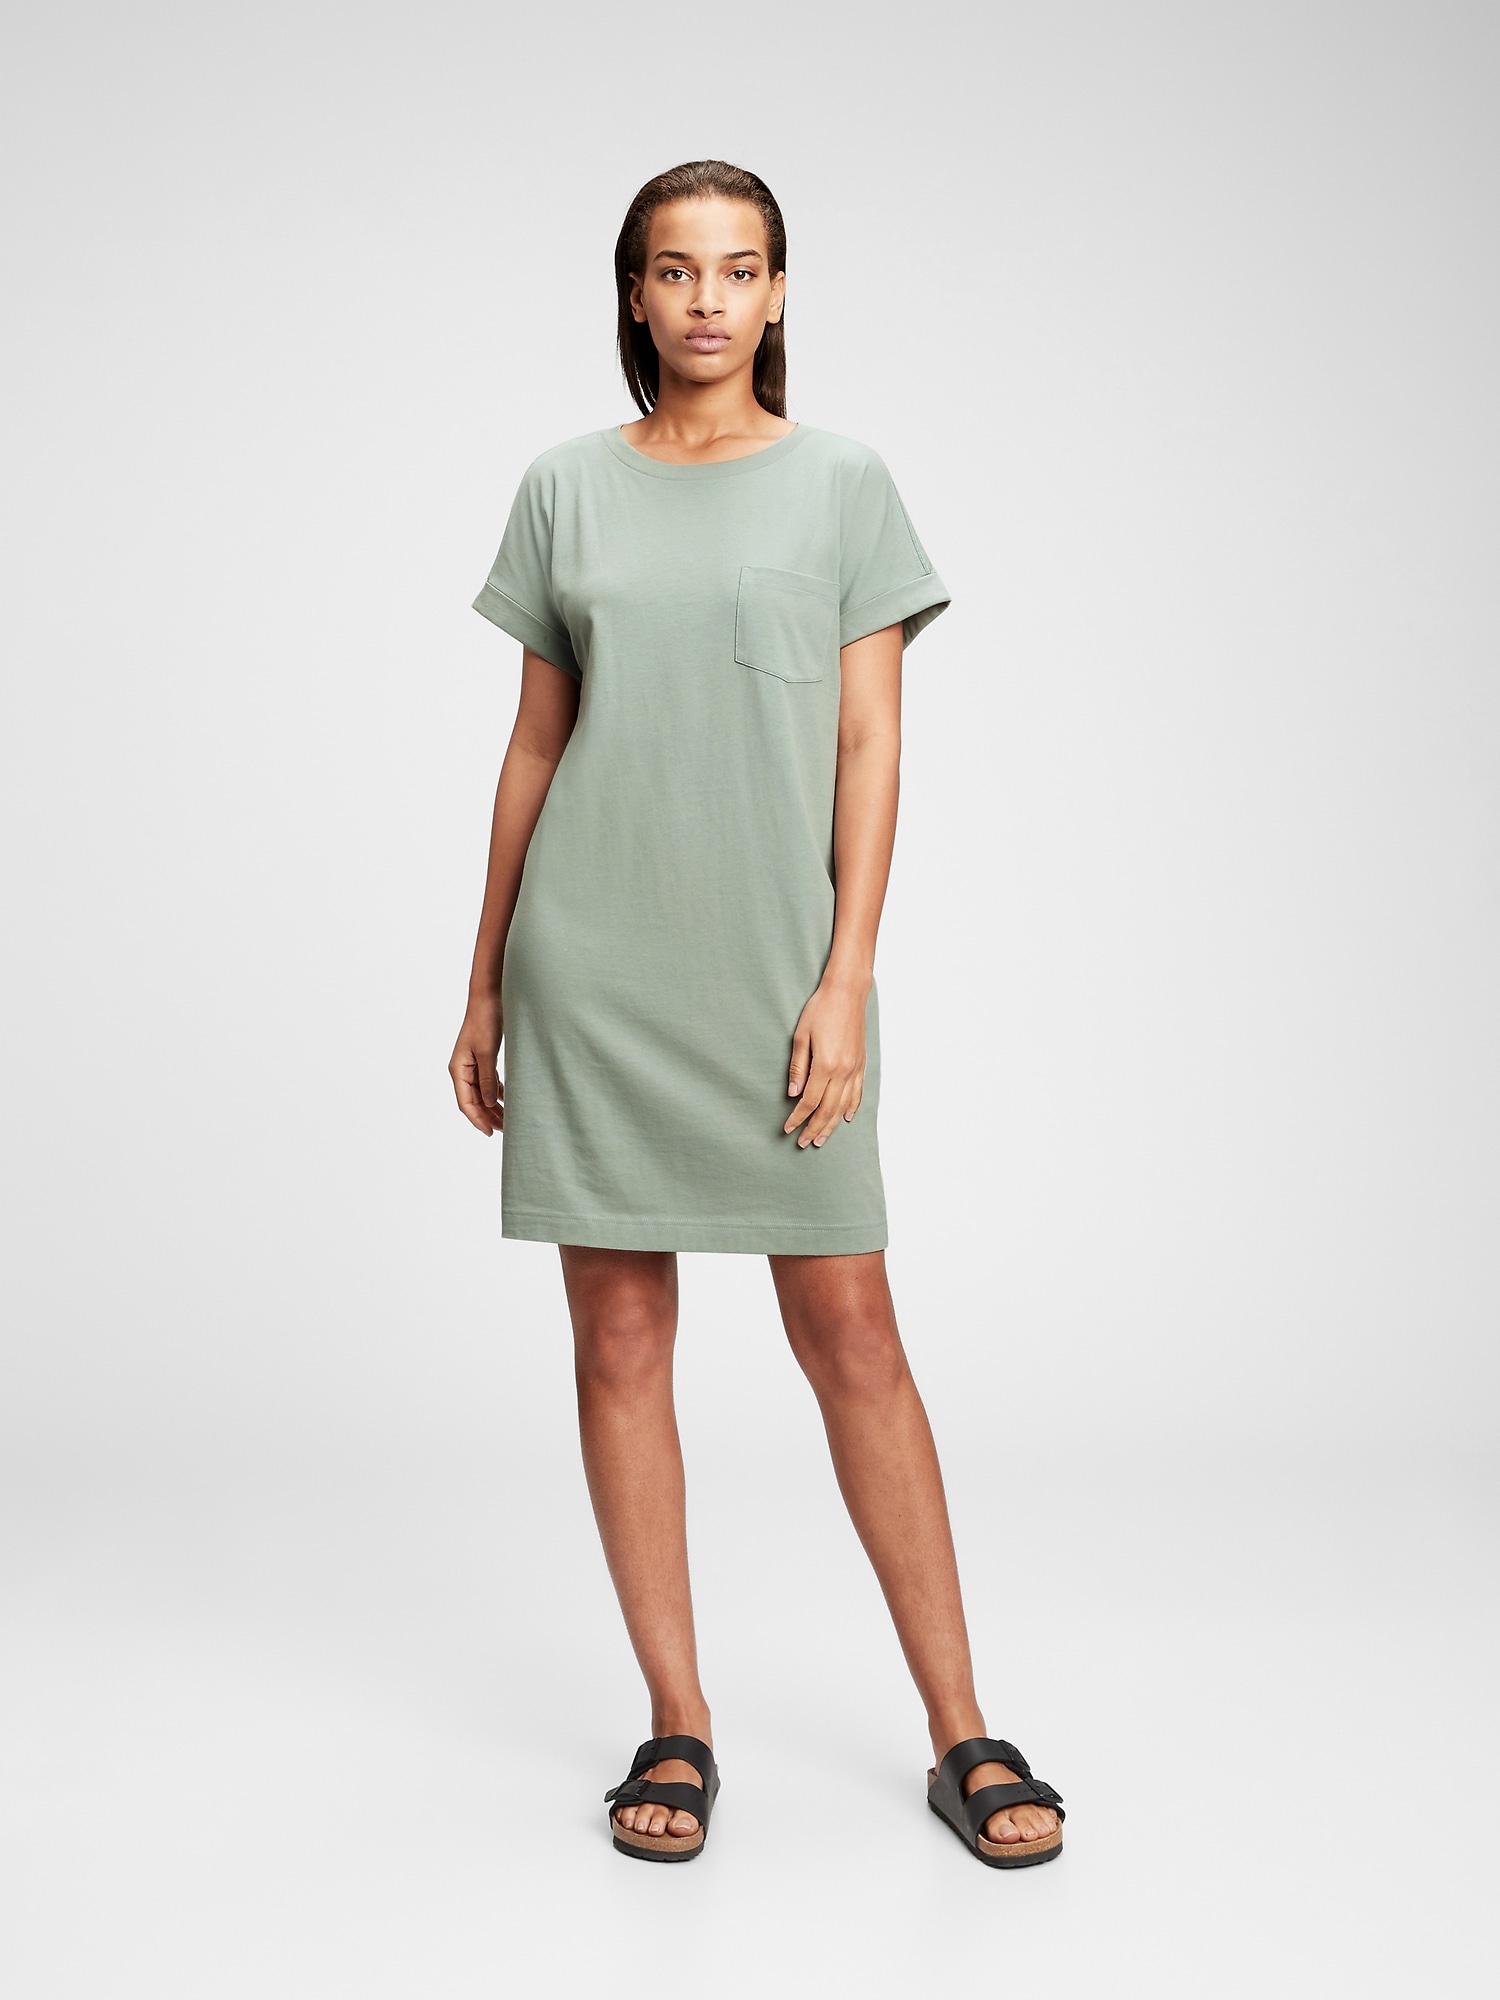 Gap T Shirt Dress Sale, 54% OFF ...